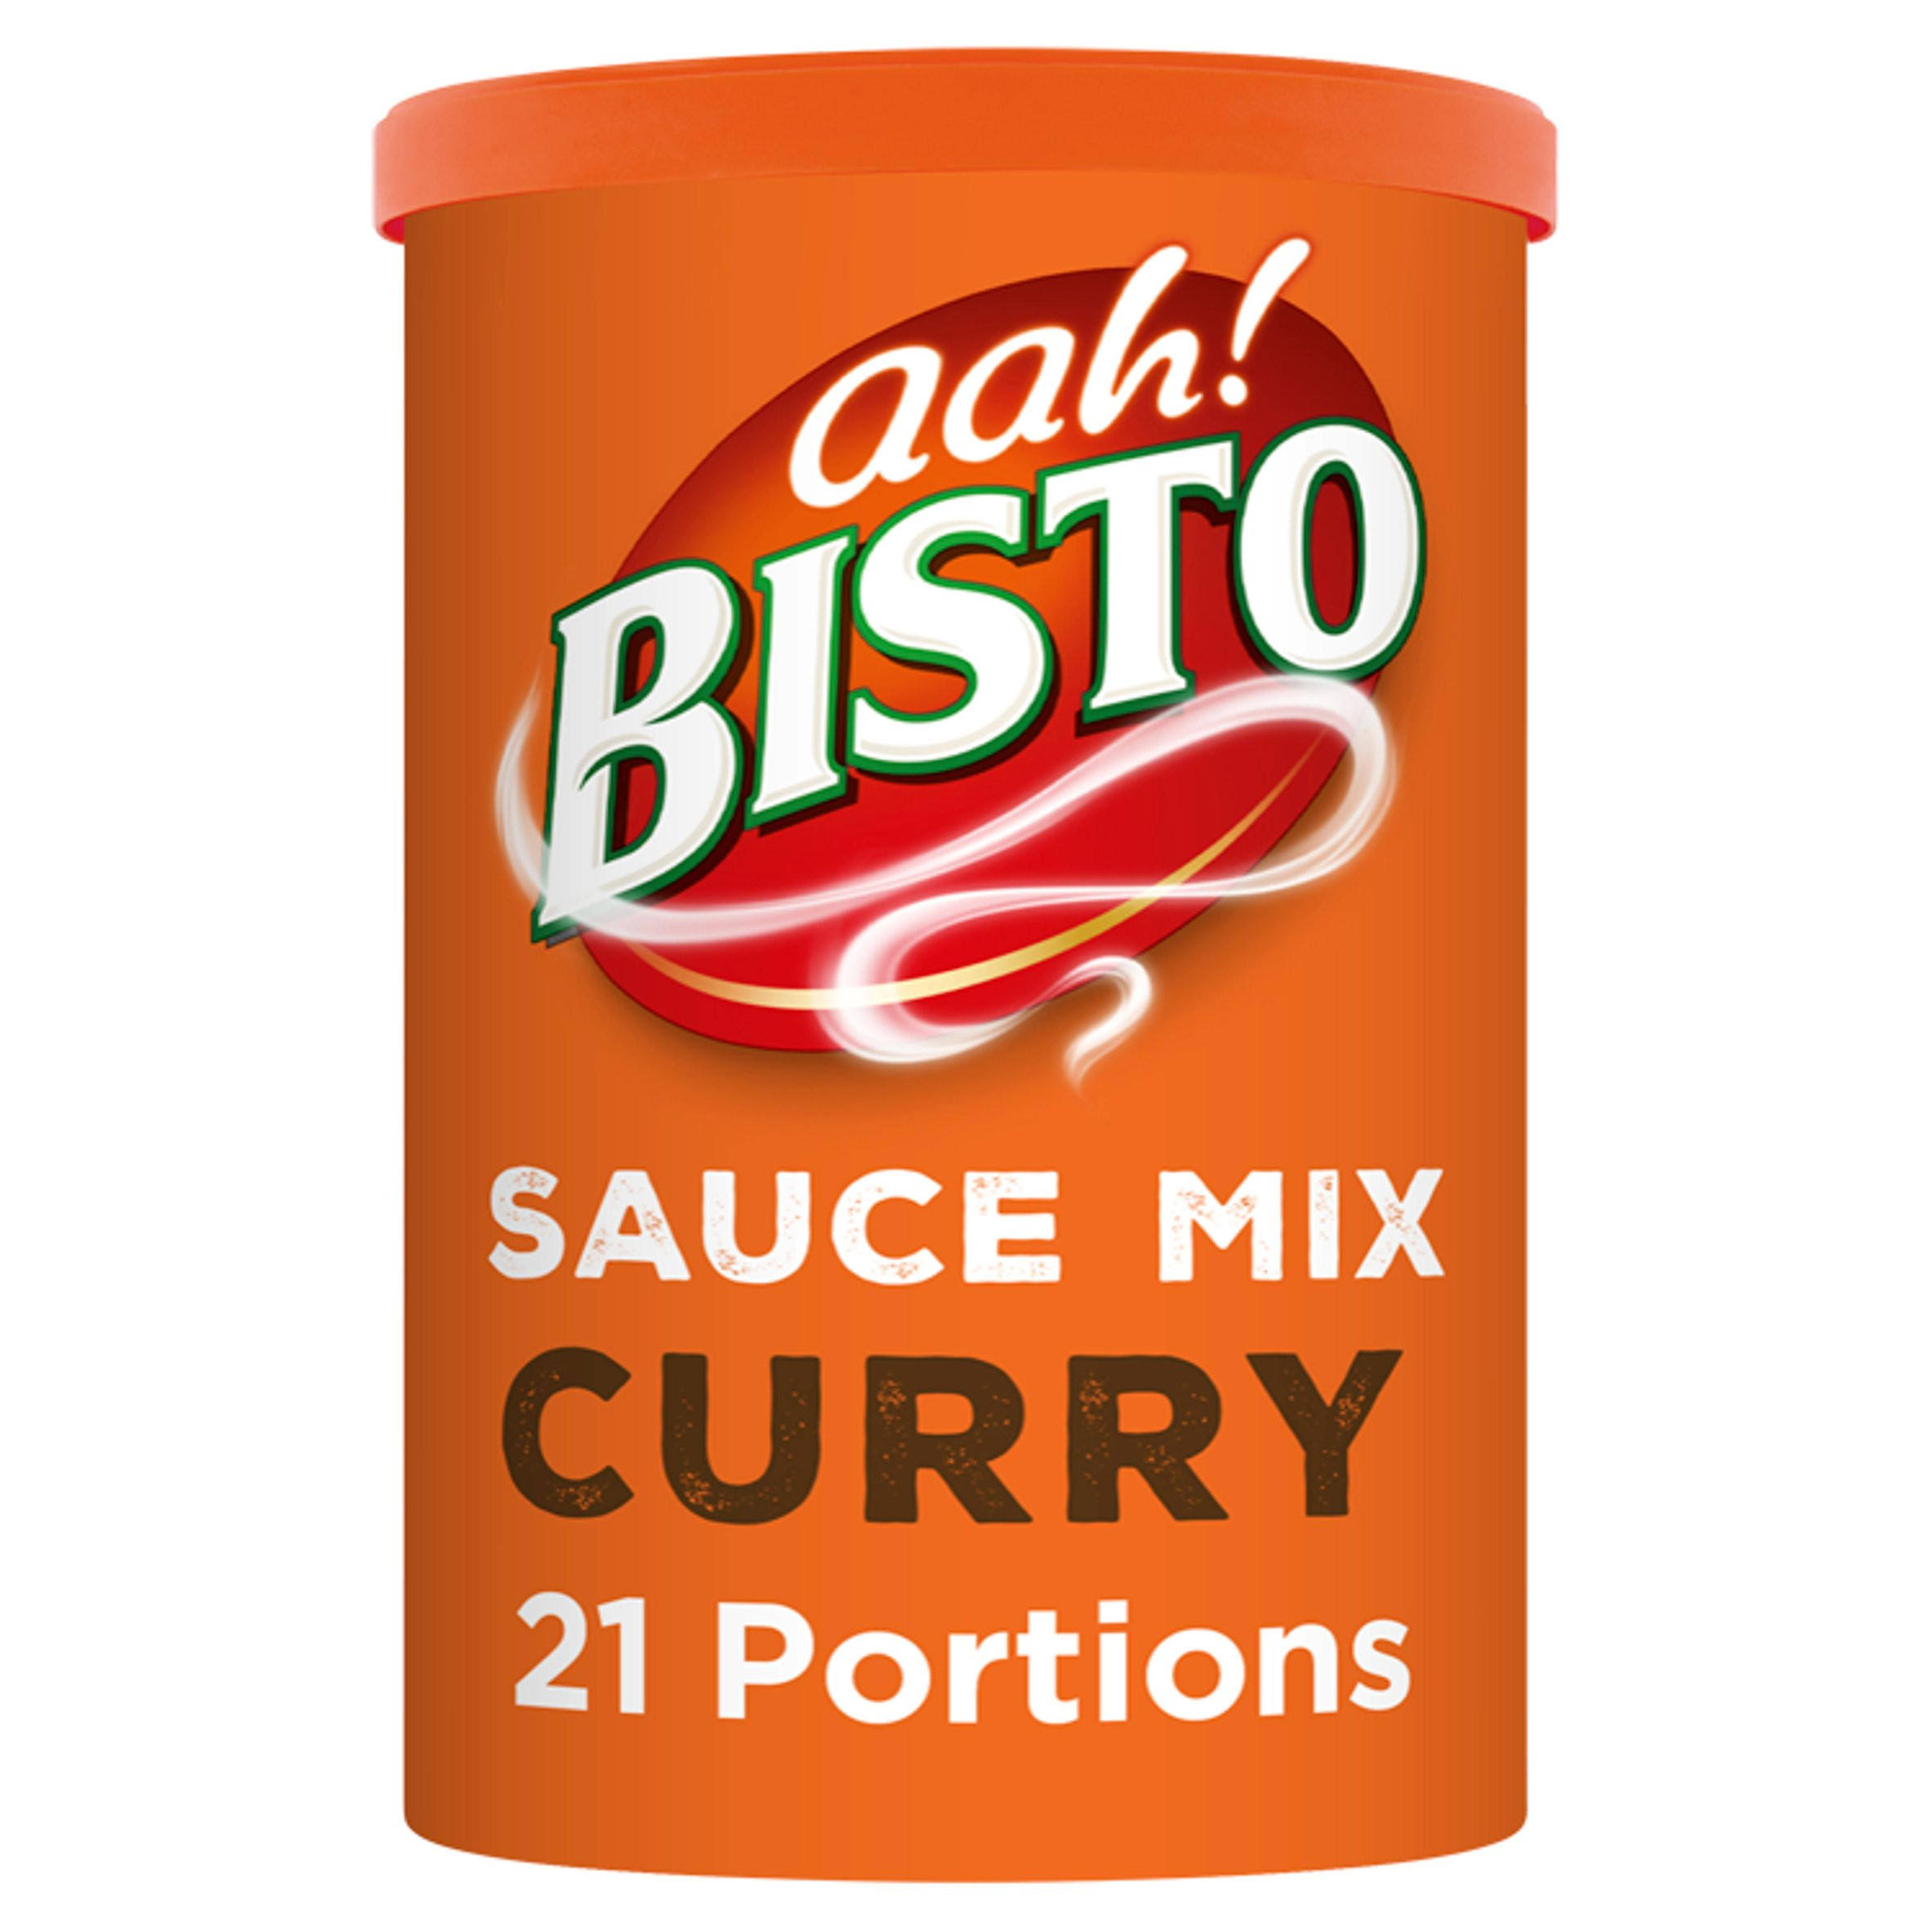 Bisto Chip Shop Curry Sauce Granules 190g/6.7oz Drum.